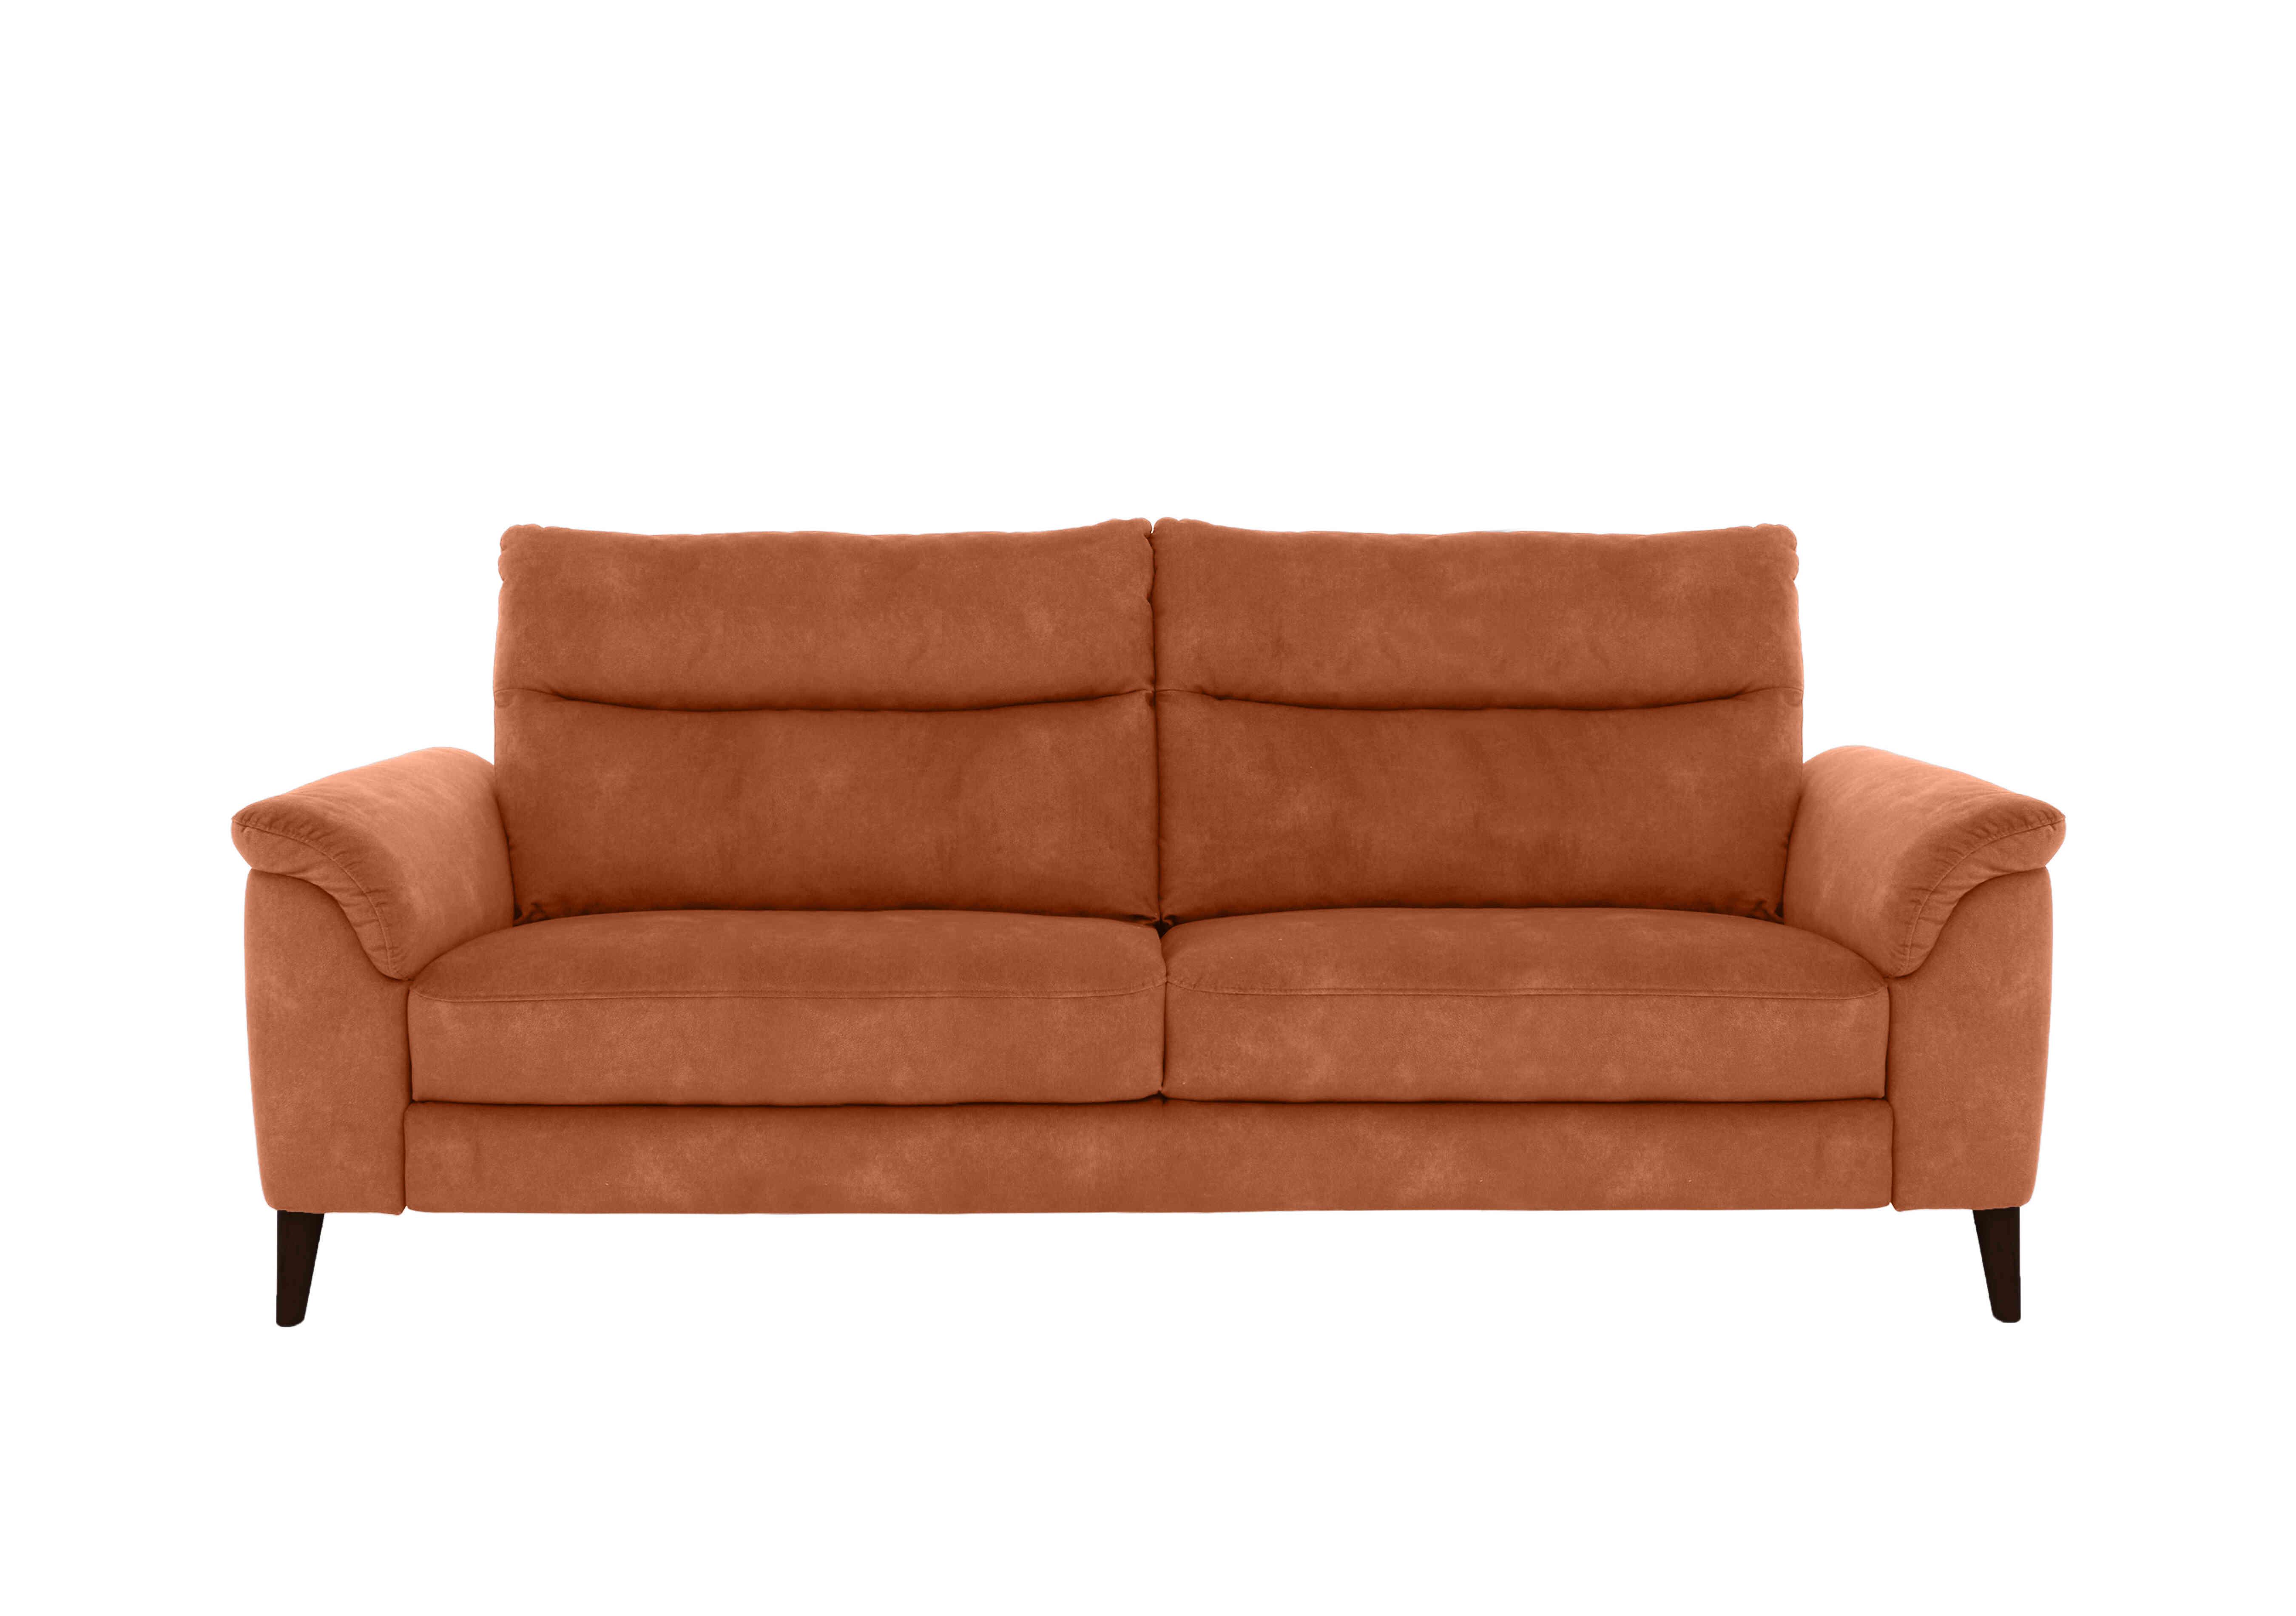 Morgan 3 Seater Fabric Sofa in Pumpkin Dexter 09 43509 on Furniture Village